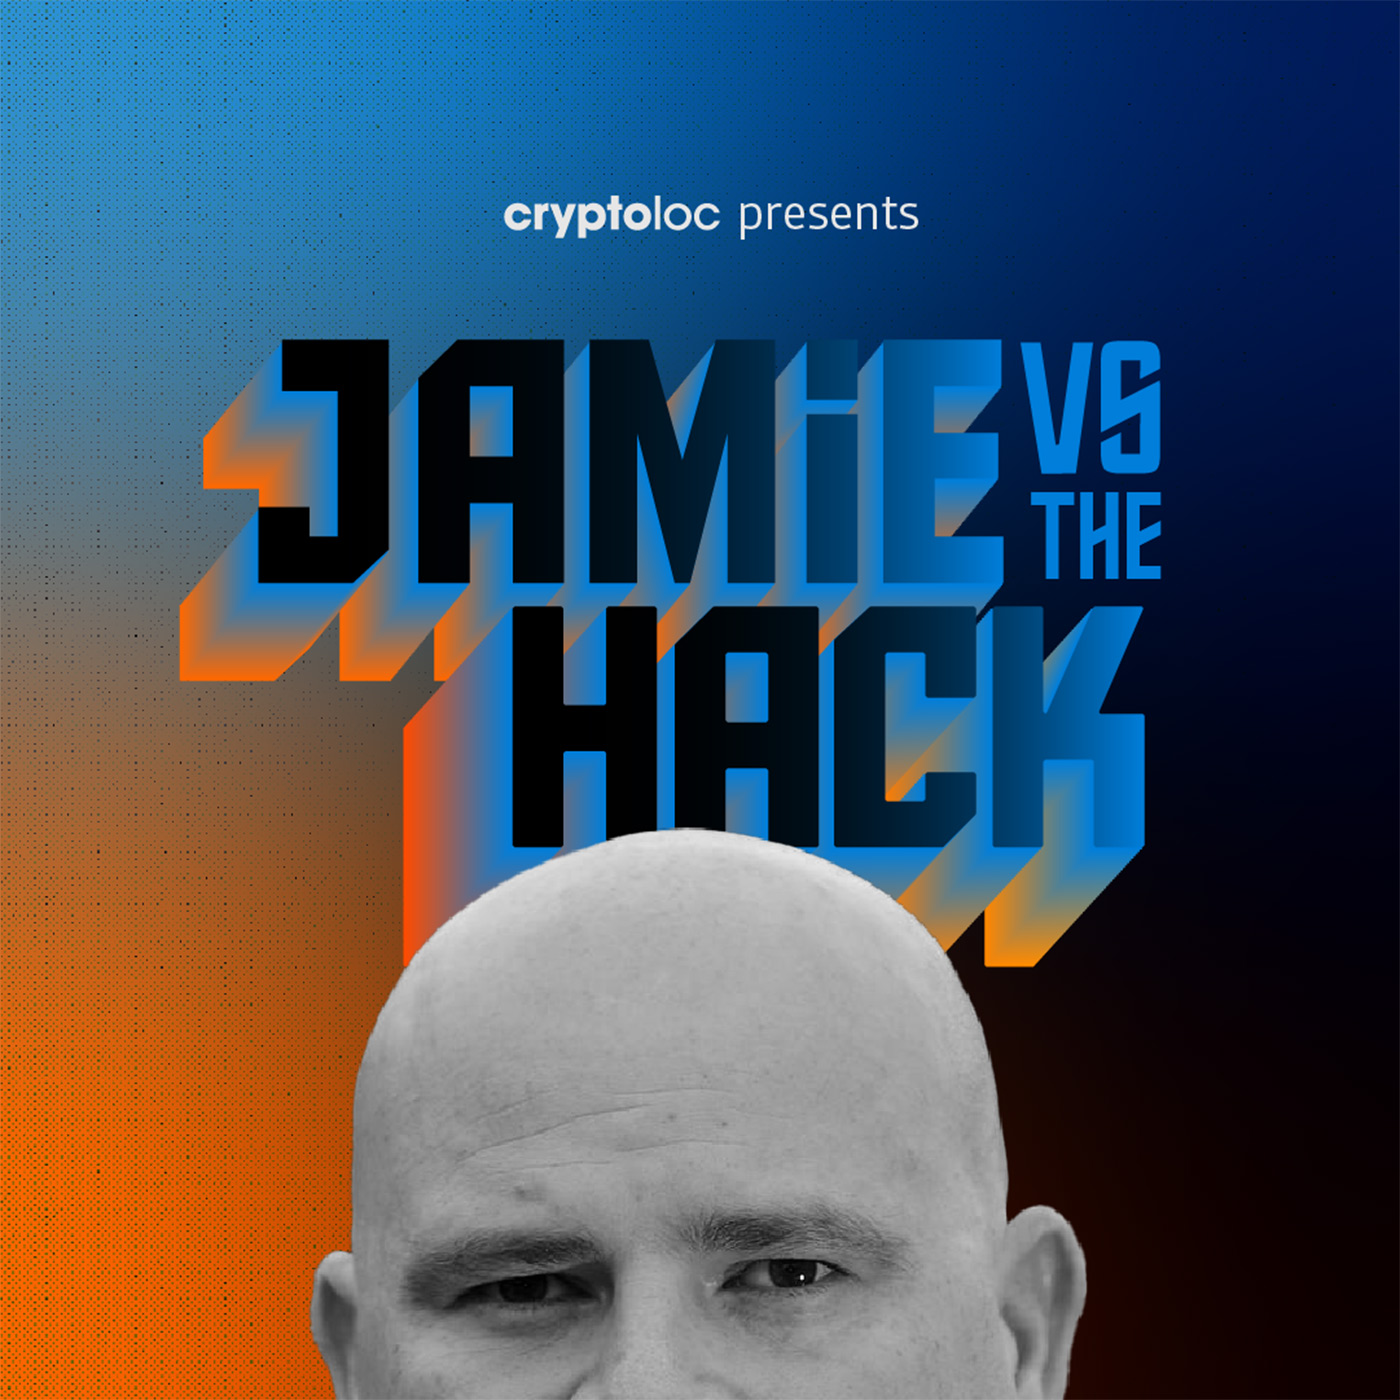 Artwork for podcast Jamie Versus The Hack